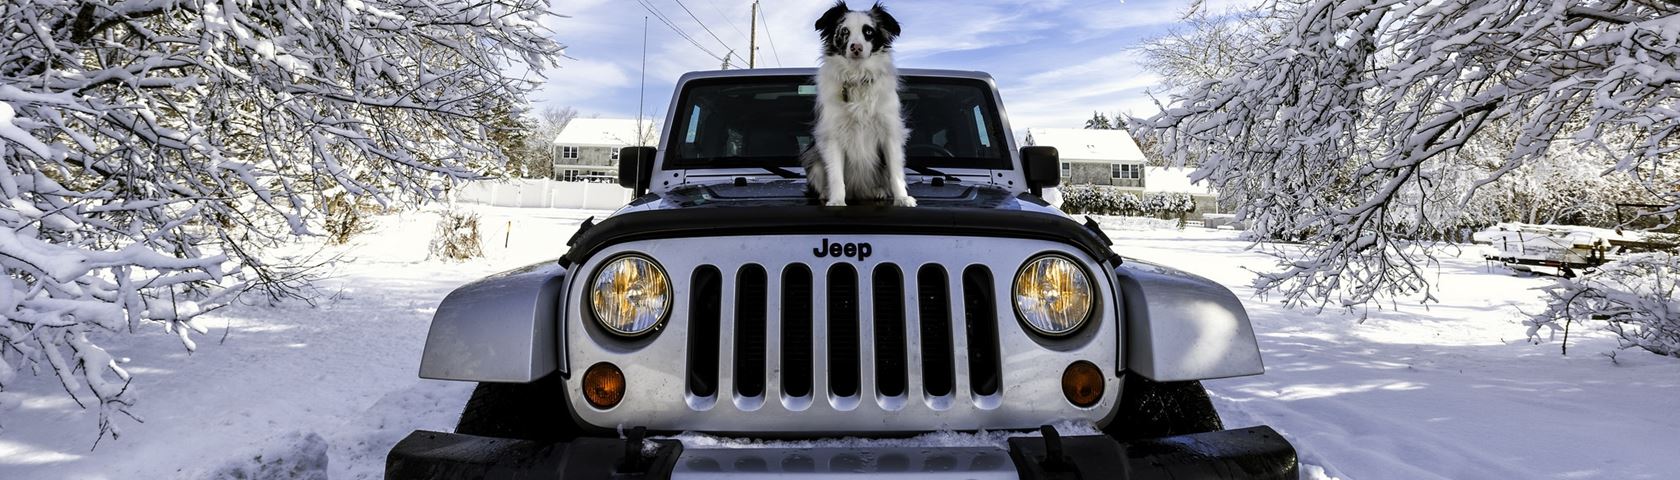 Doggy on a Jeep